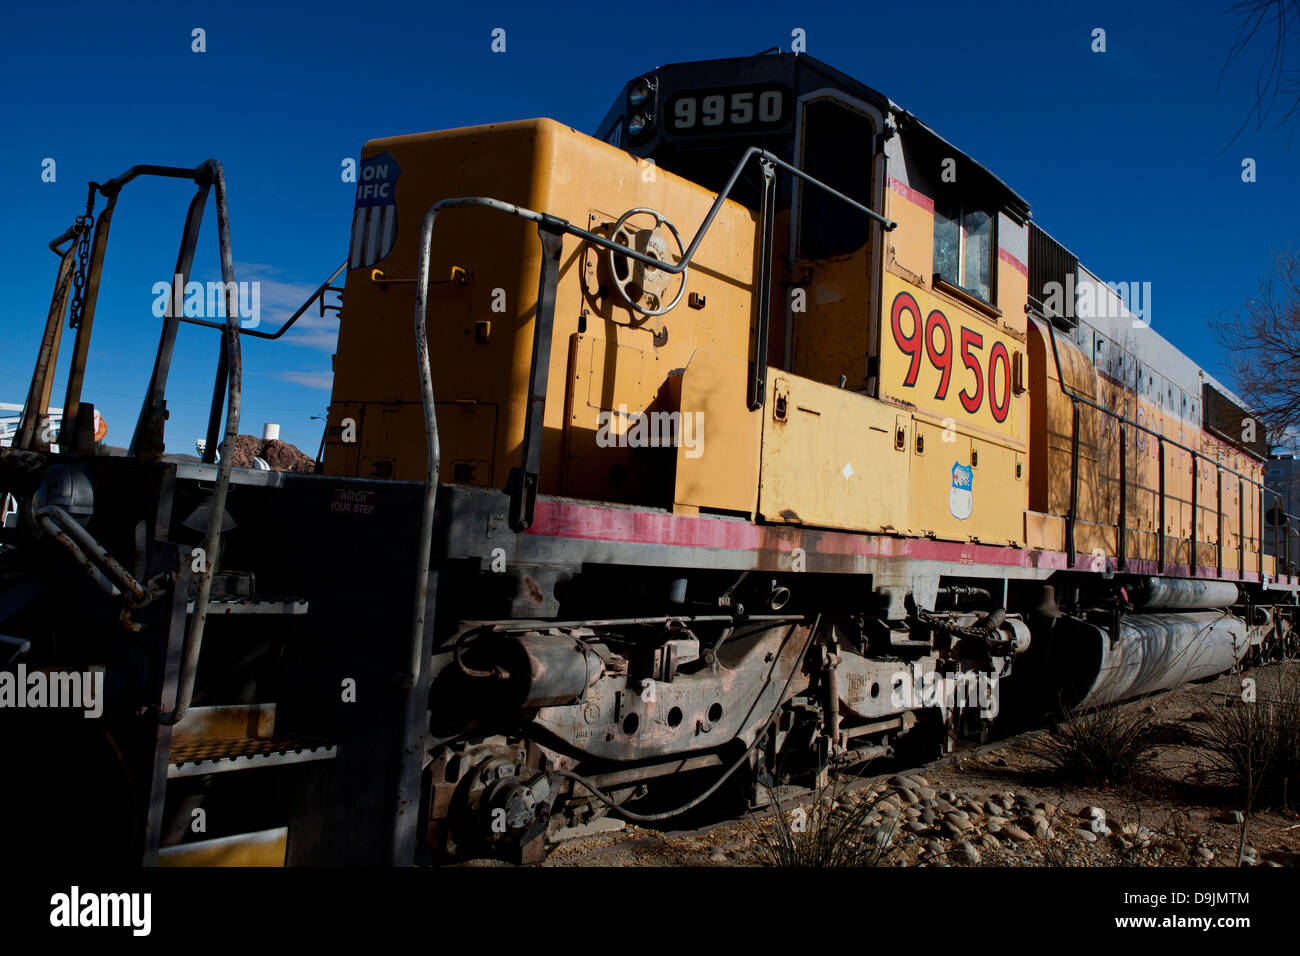 Union Pacific train engine 9950, Harvey House Railroad Depot, originally the Casa del Desierto train station,Barstow, California, United States of America Stock Photo